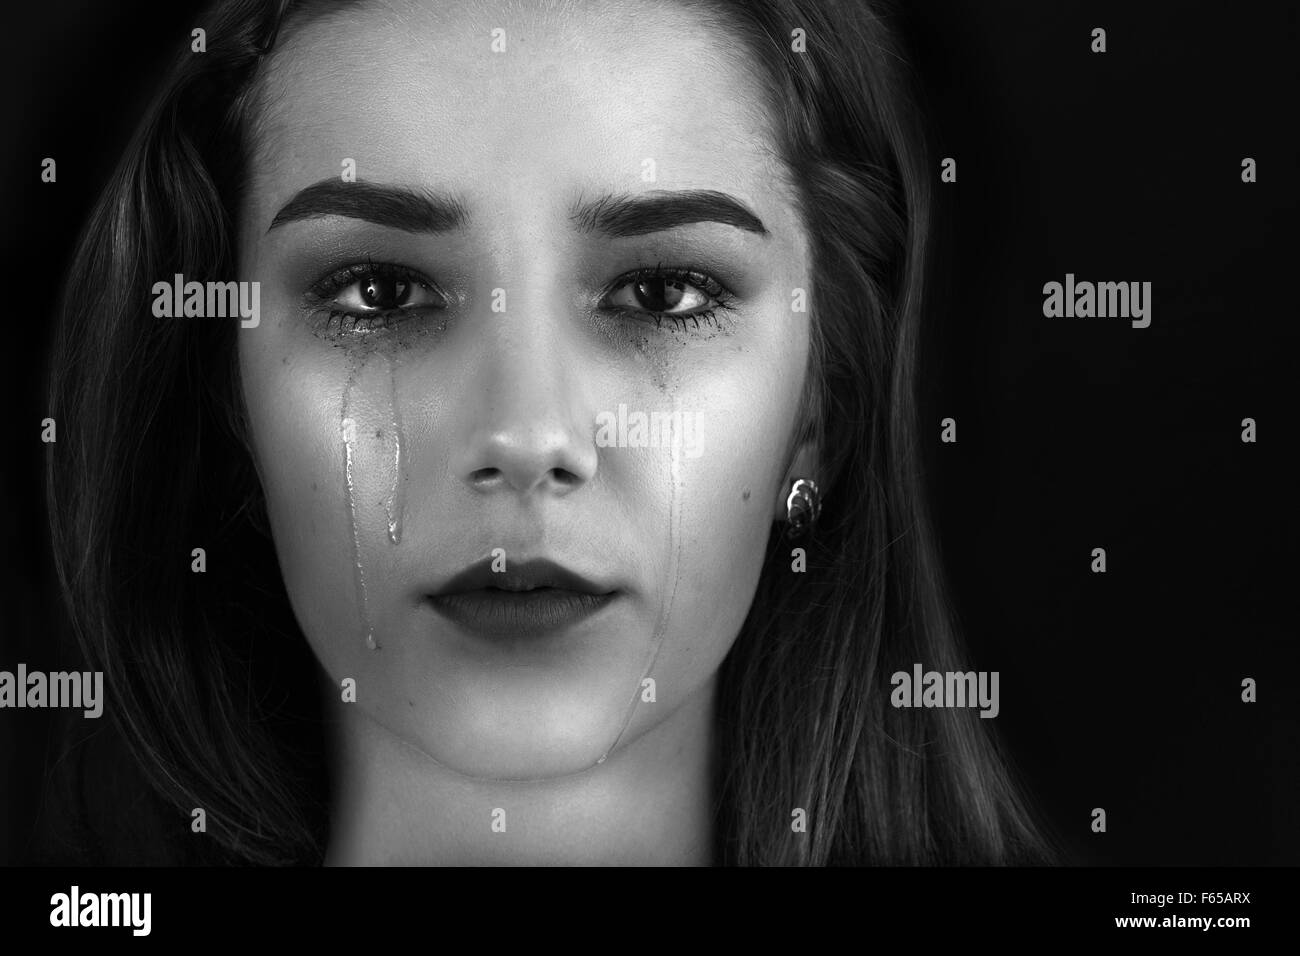 beautiful woman crying on black background, monochrome Stock Photo